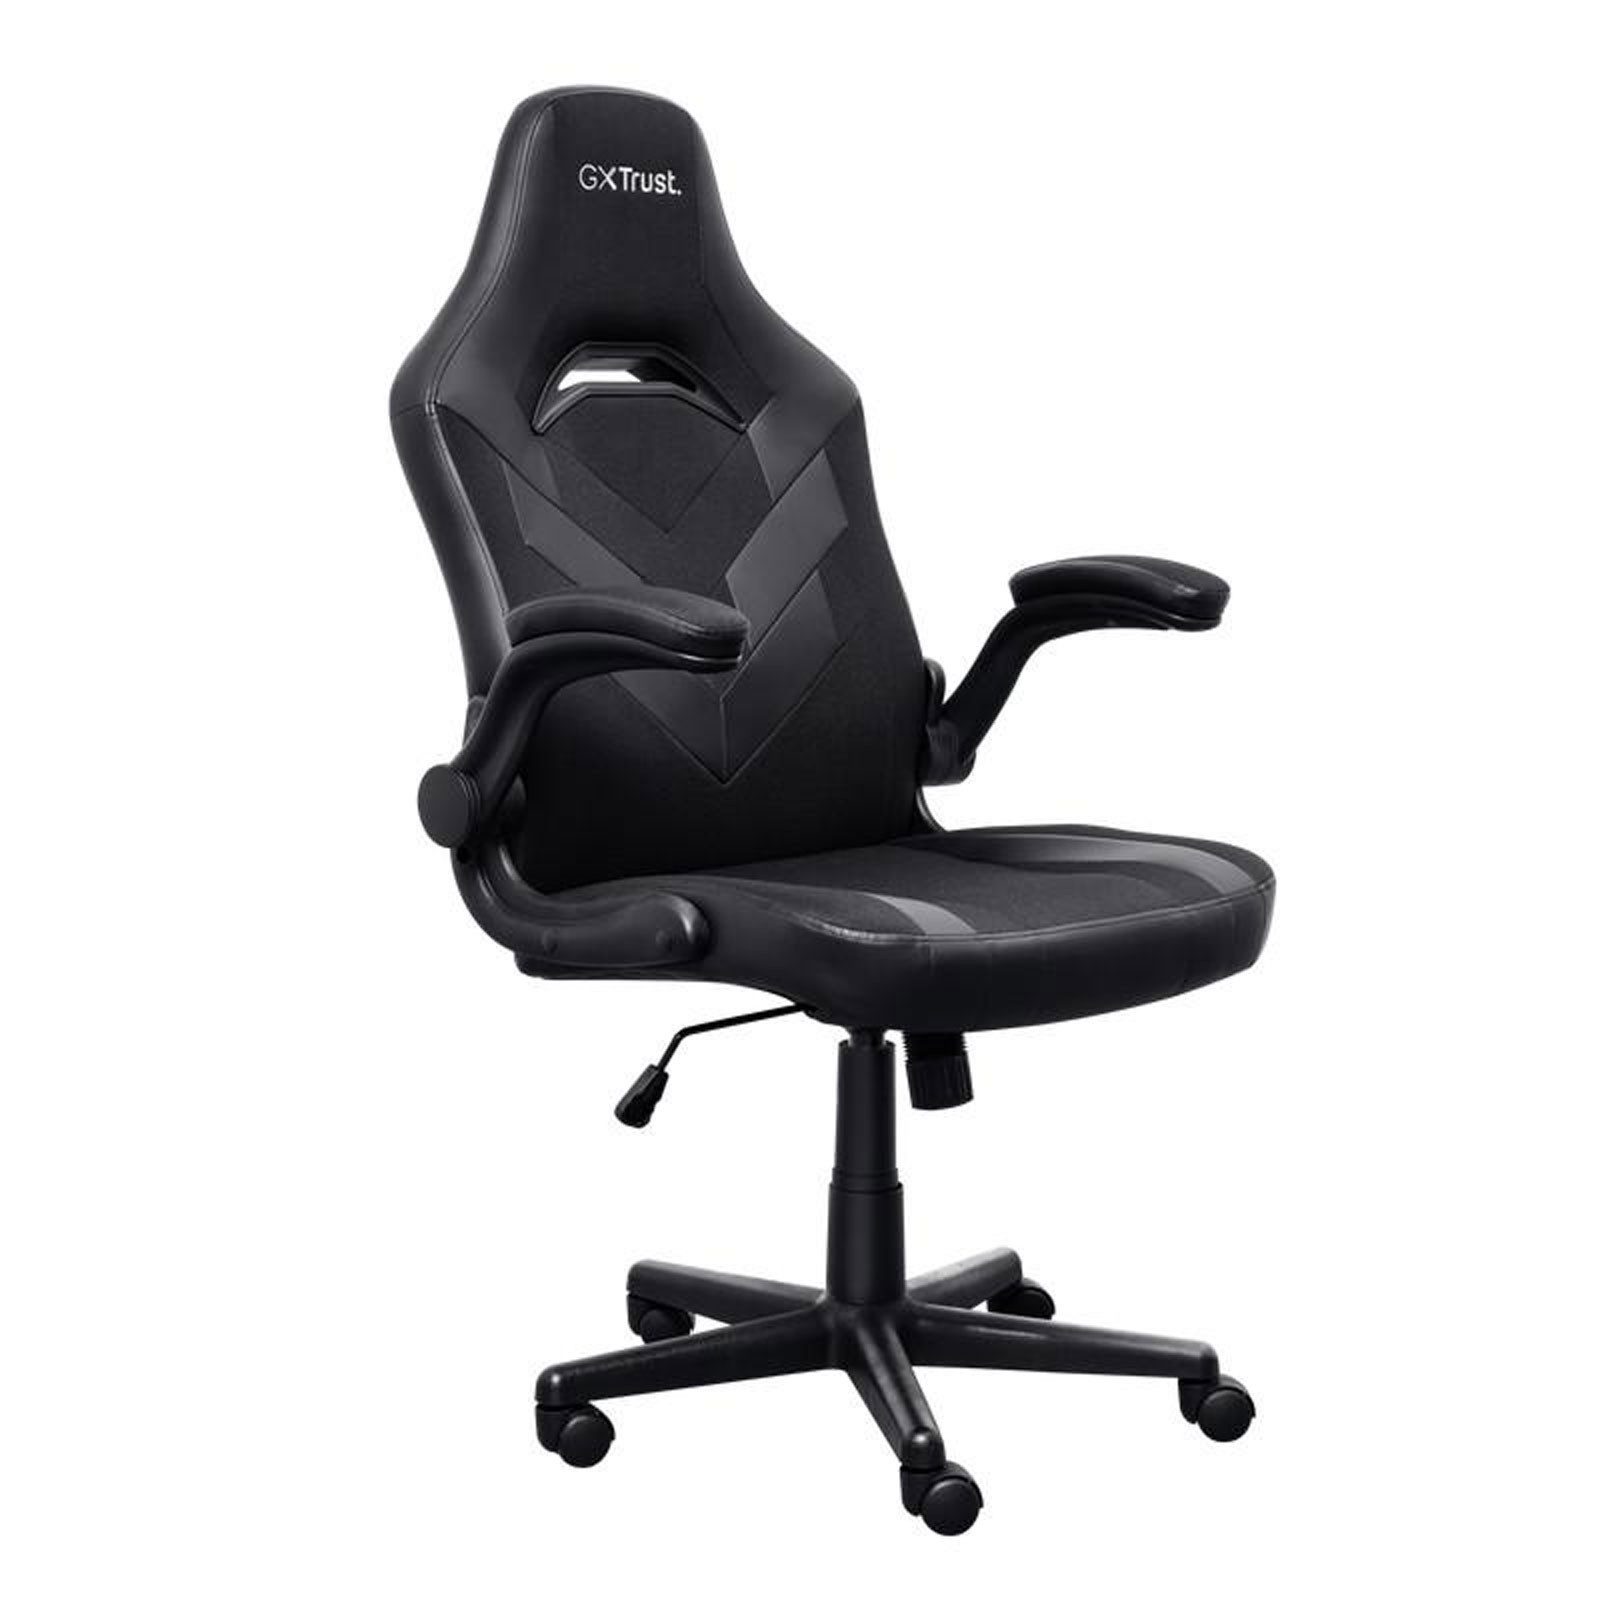 Trust Gaming Chair GXT 703B